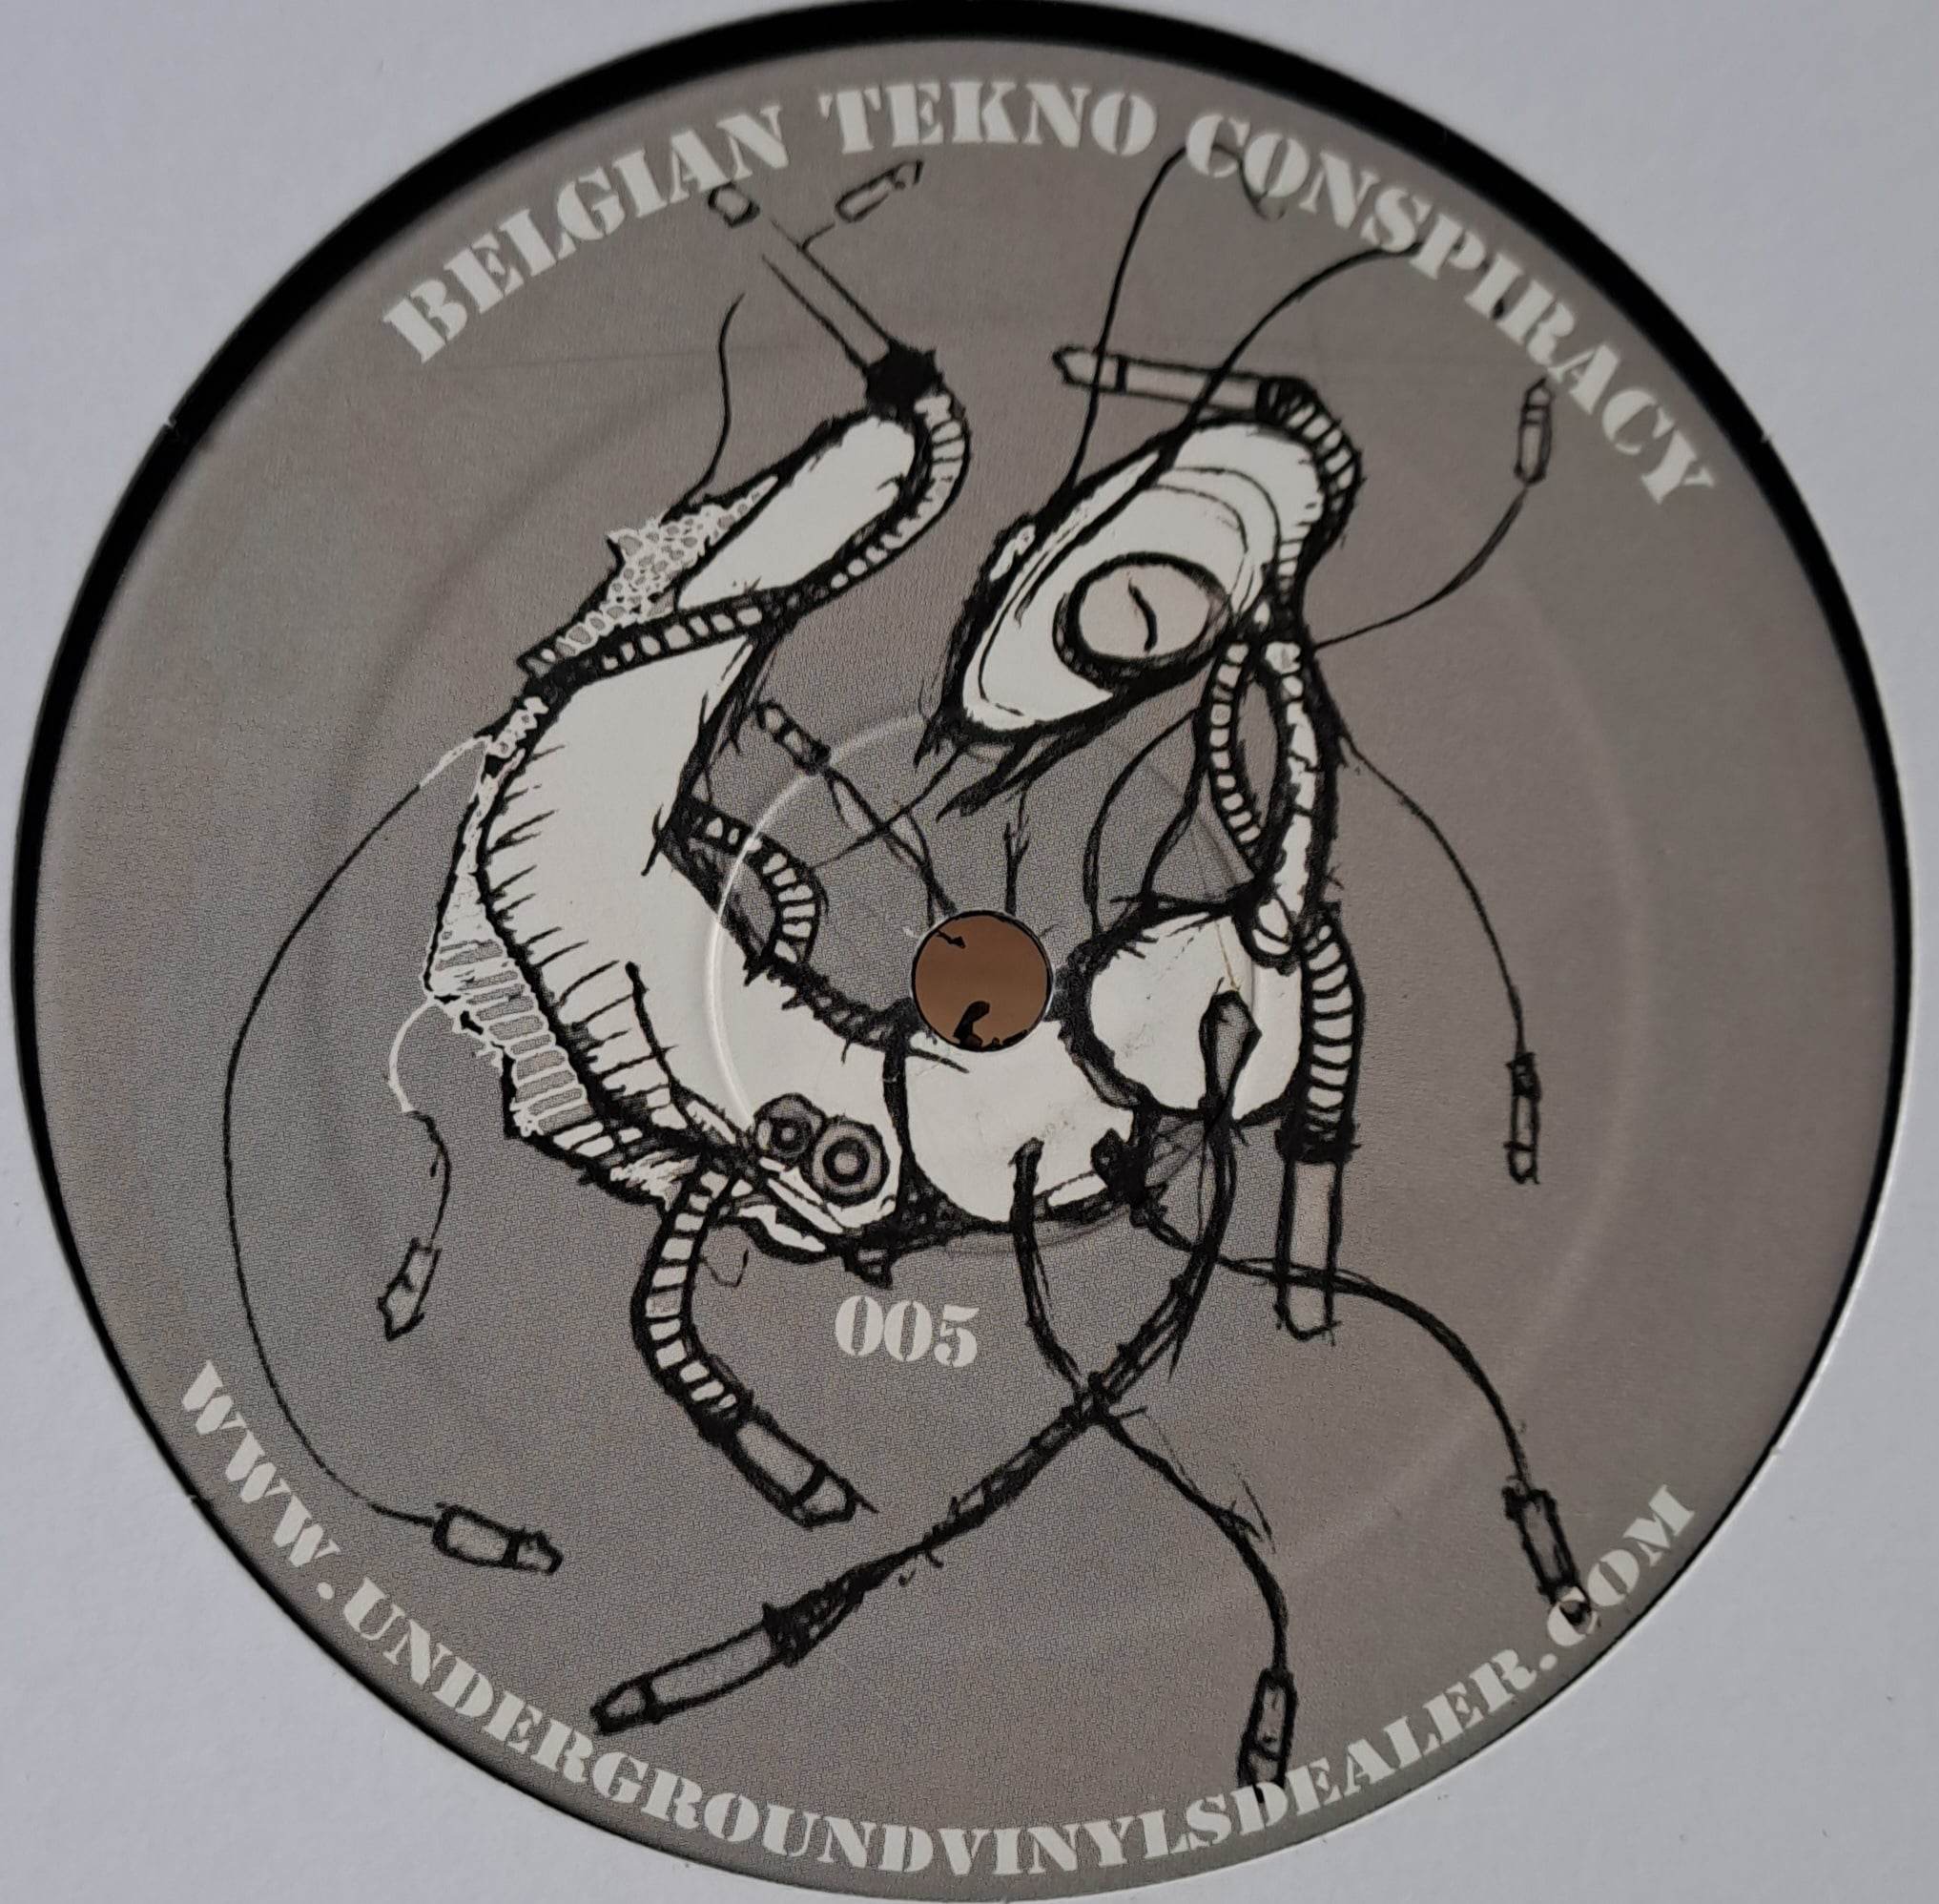 Belgian Tekno Conspiracy 005 - vinyle acid